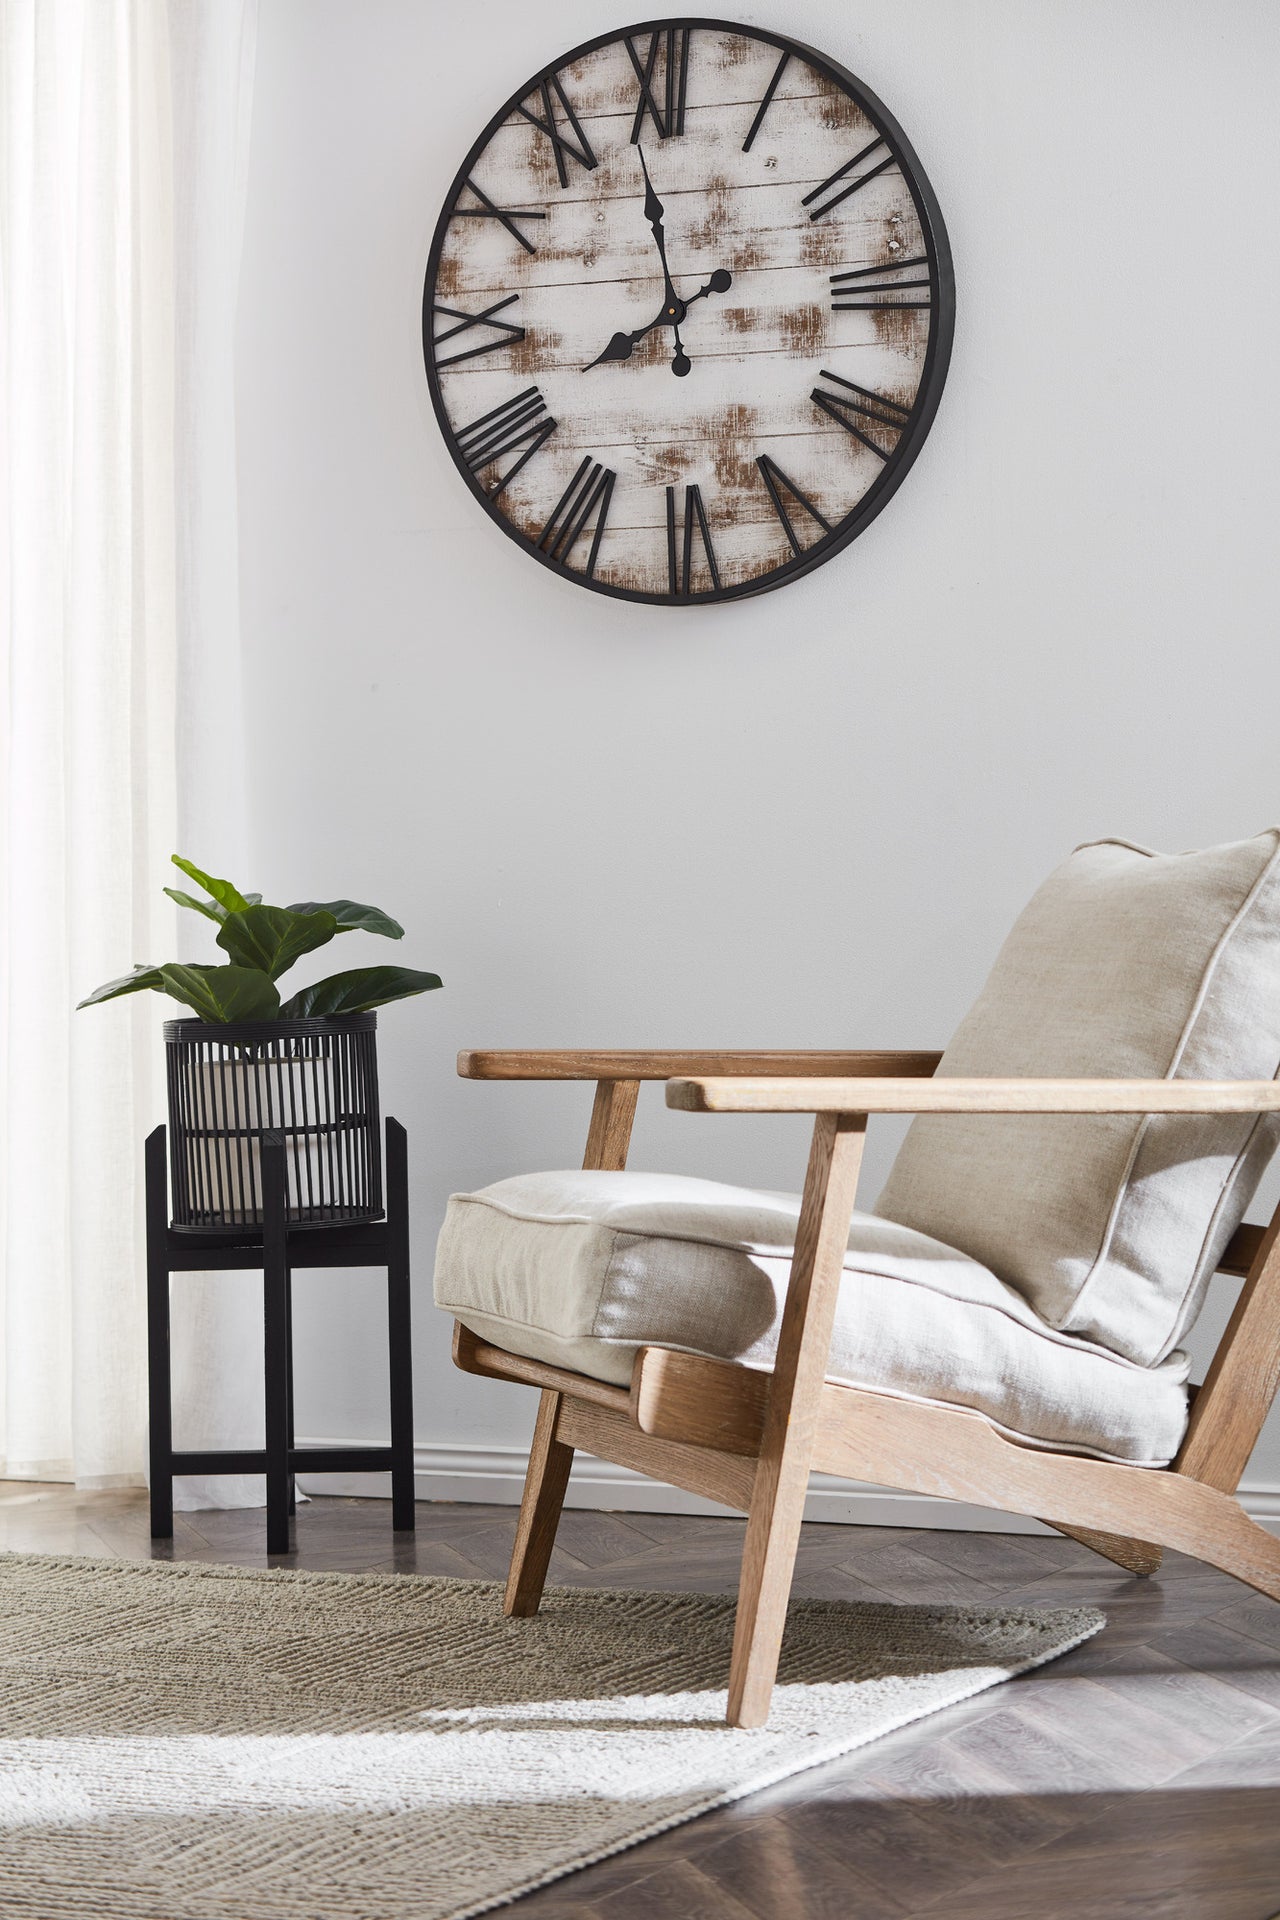 Coila Solid Oak & Linen Leisure Armchair